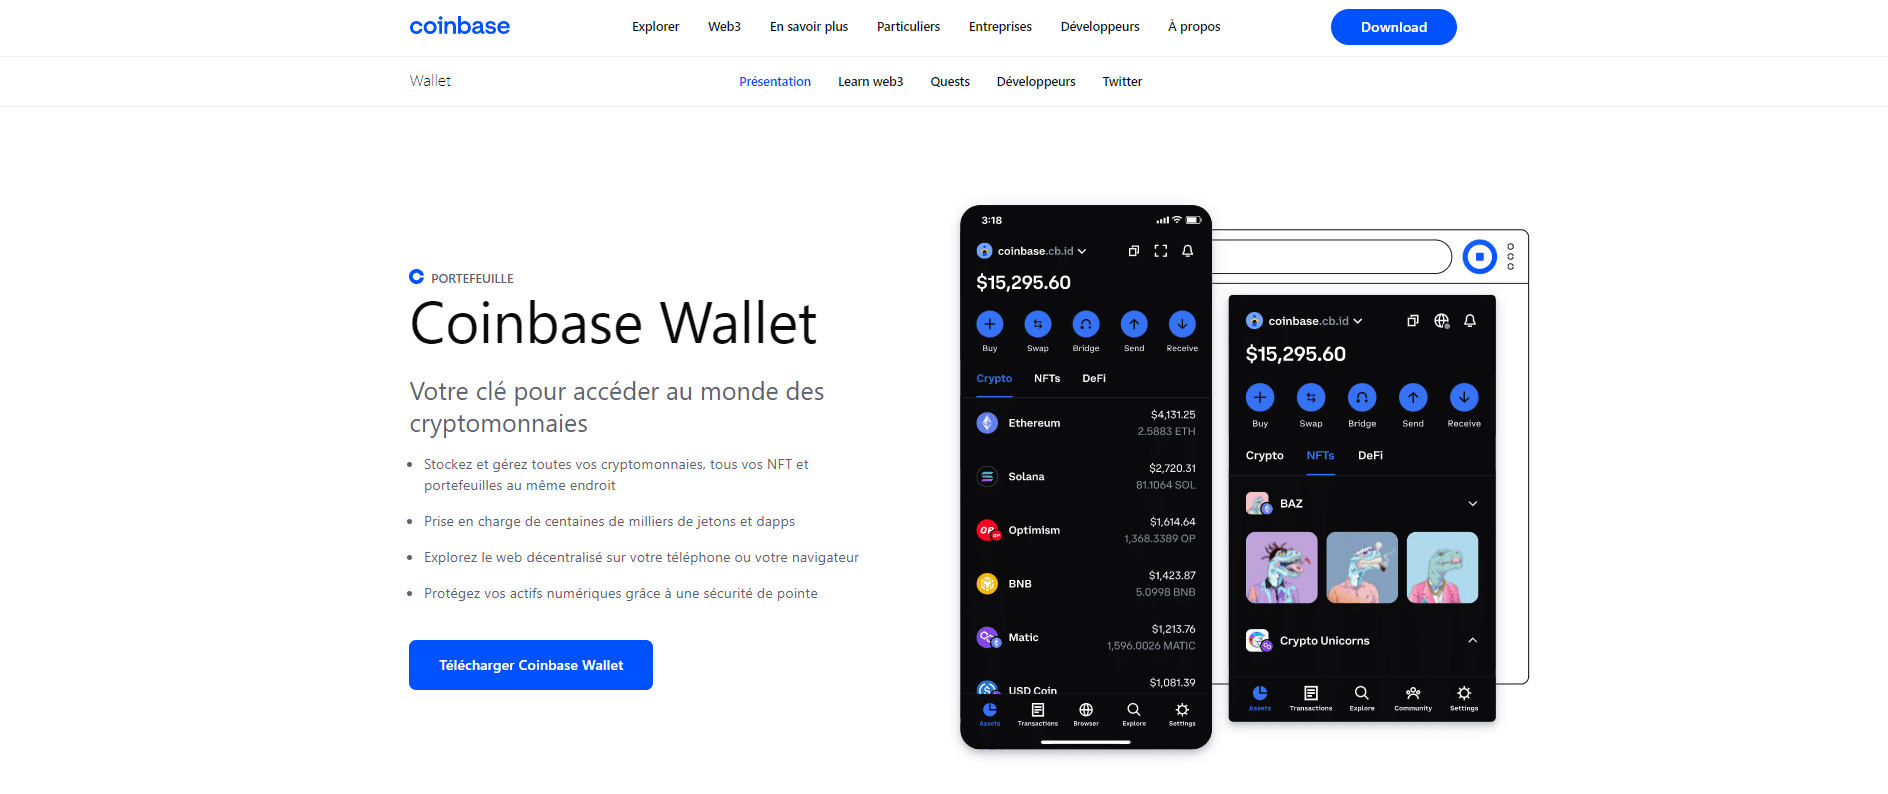 coinbase wallet splash